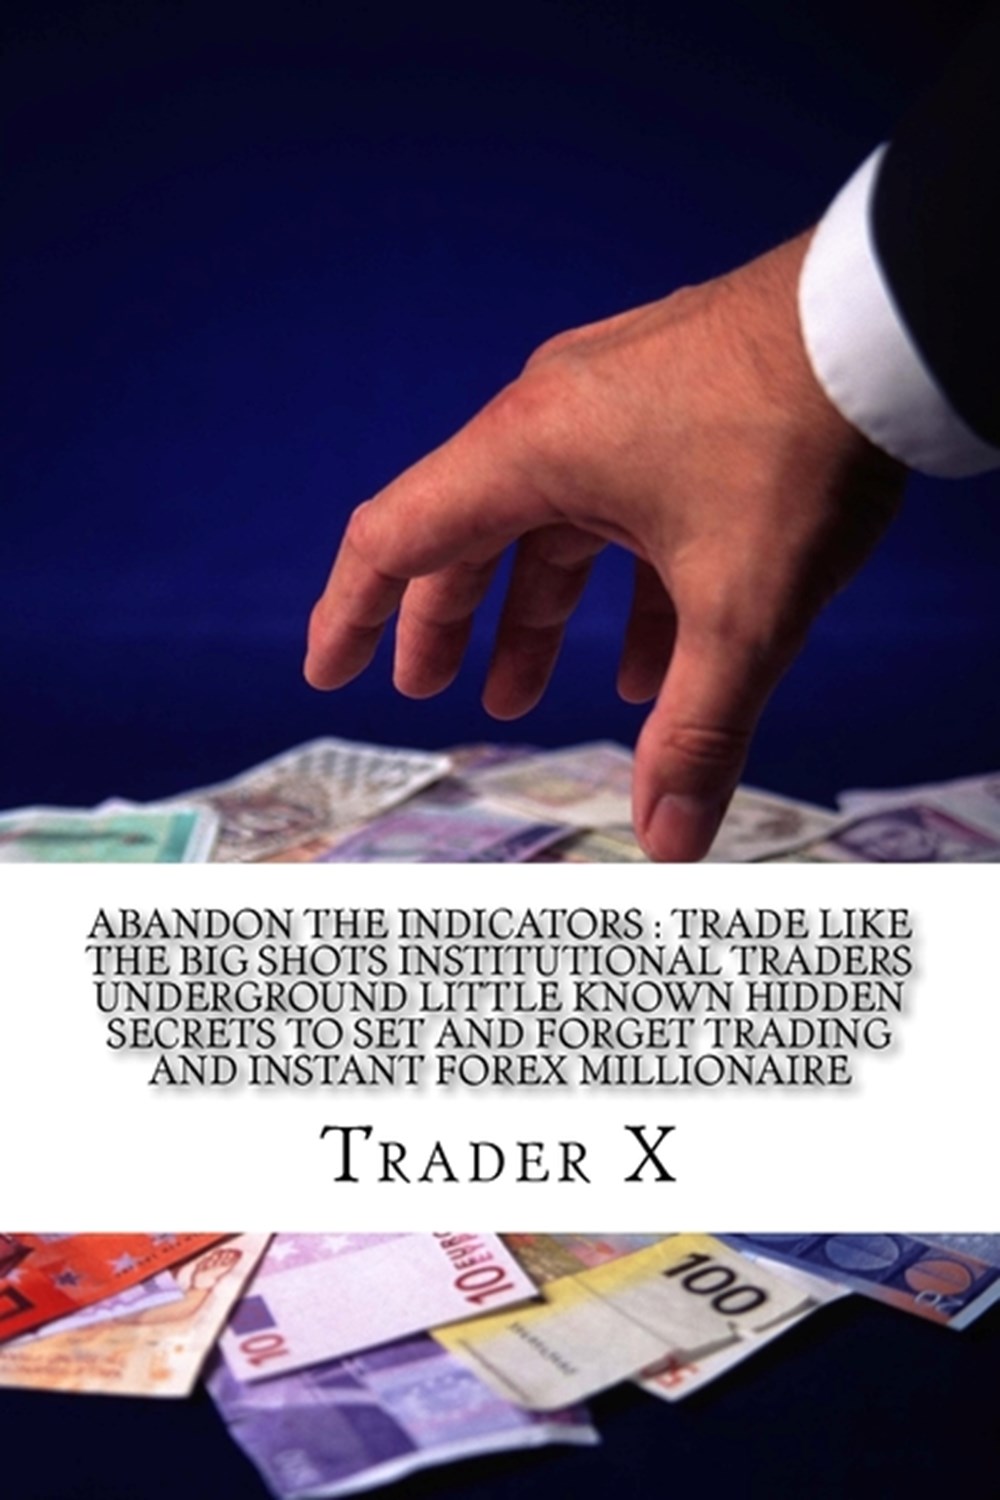 Abandon The Indicators: Trade Like The Institutional Trader Underground Smooth Sleek Secrets And Wei